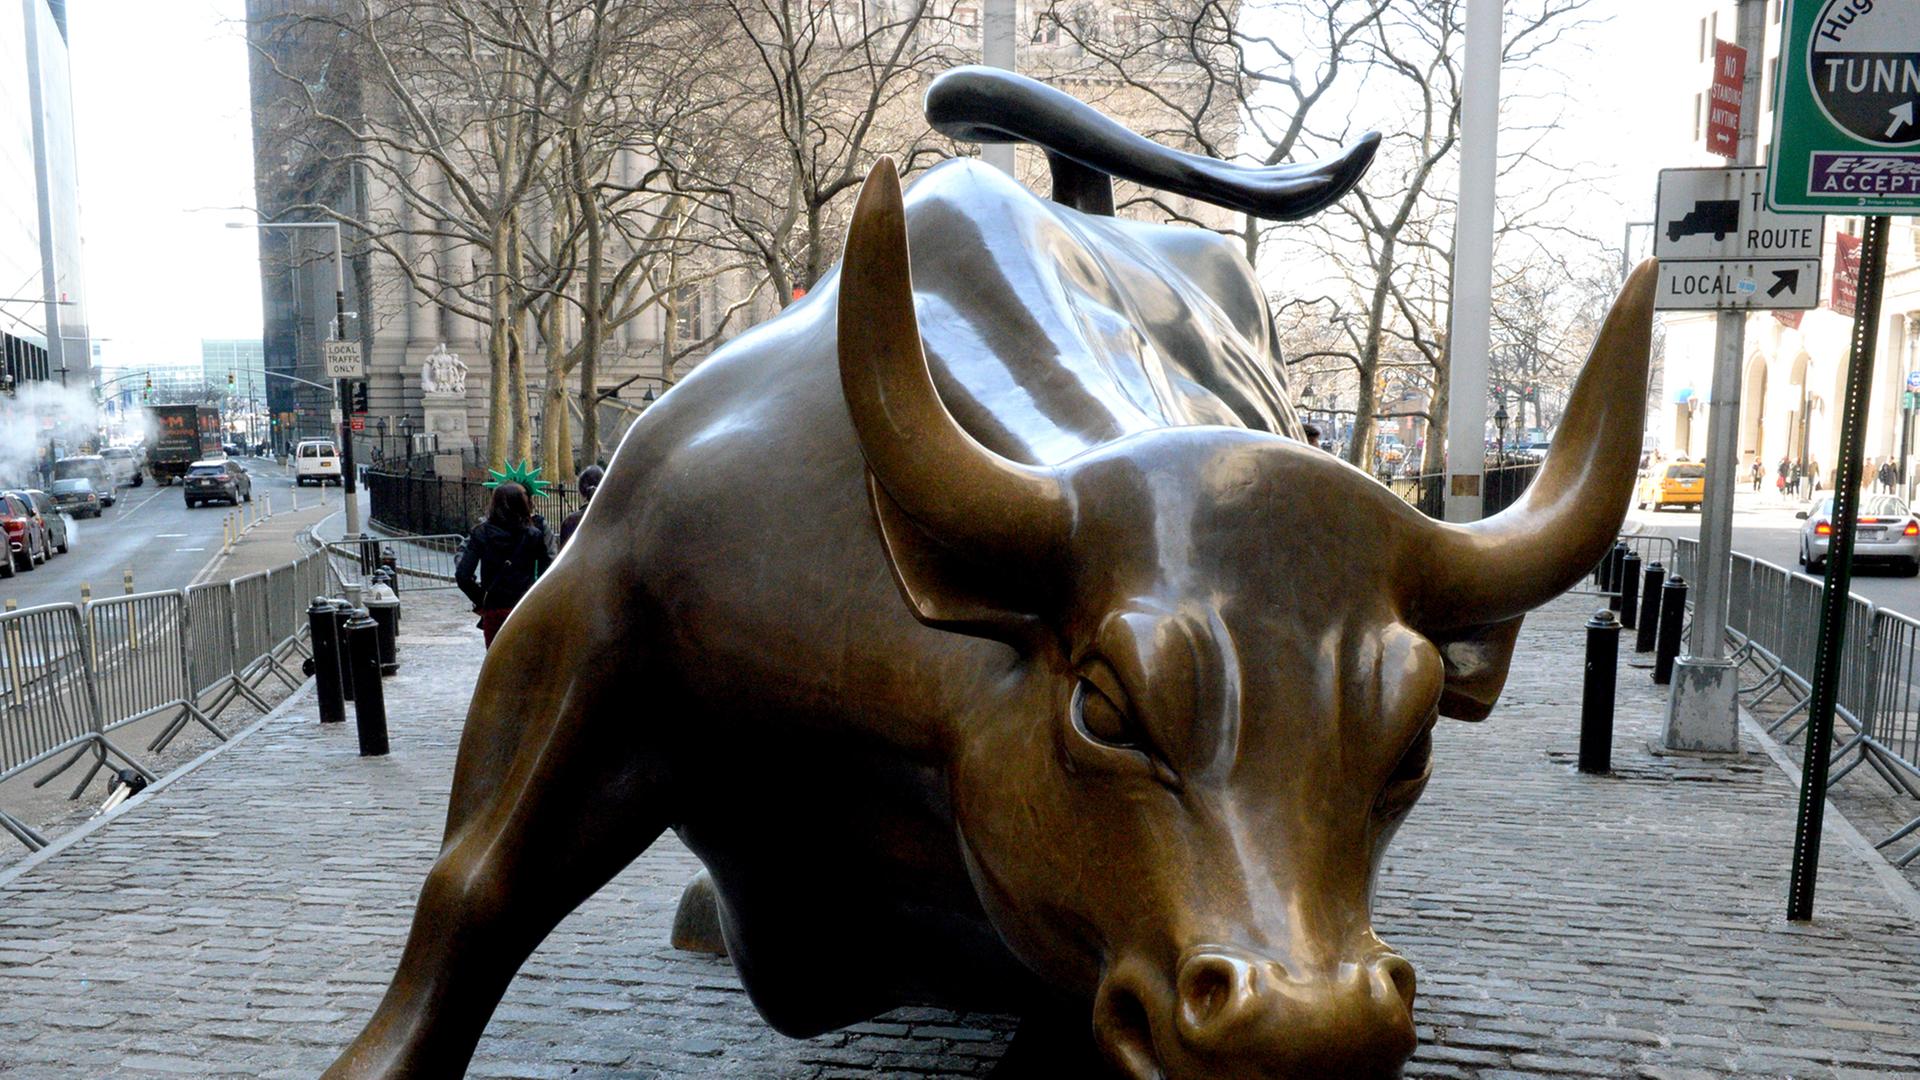 Der Charging Bull (Wall Street Bull) nahe der Wall Street in New York (USA), aufgenommen am 08.03.2014.